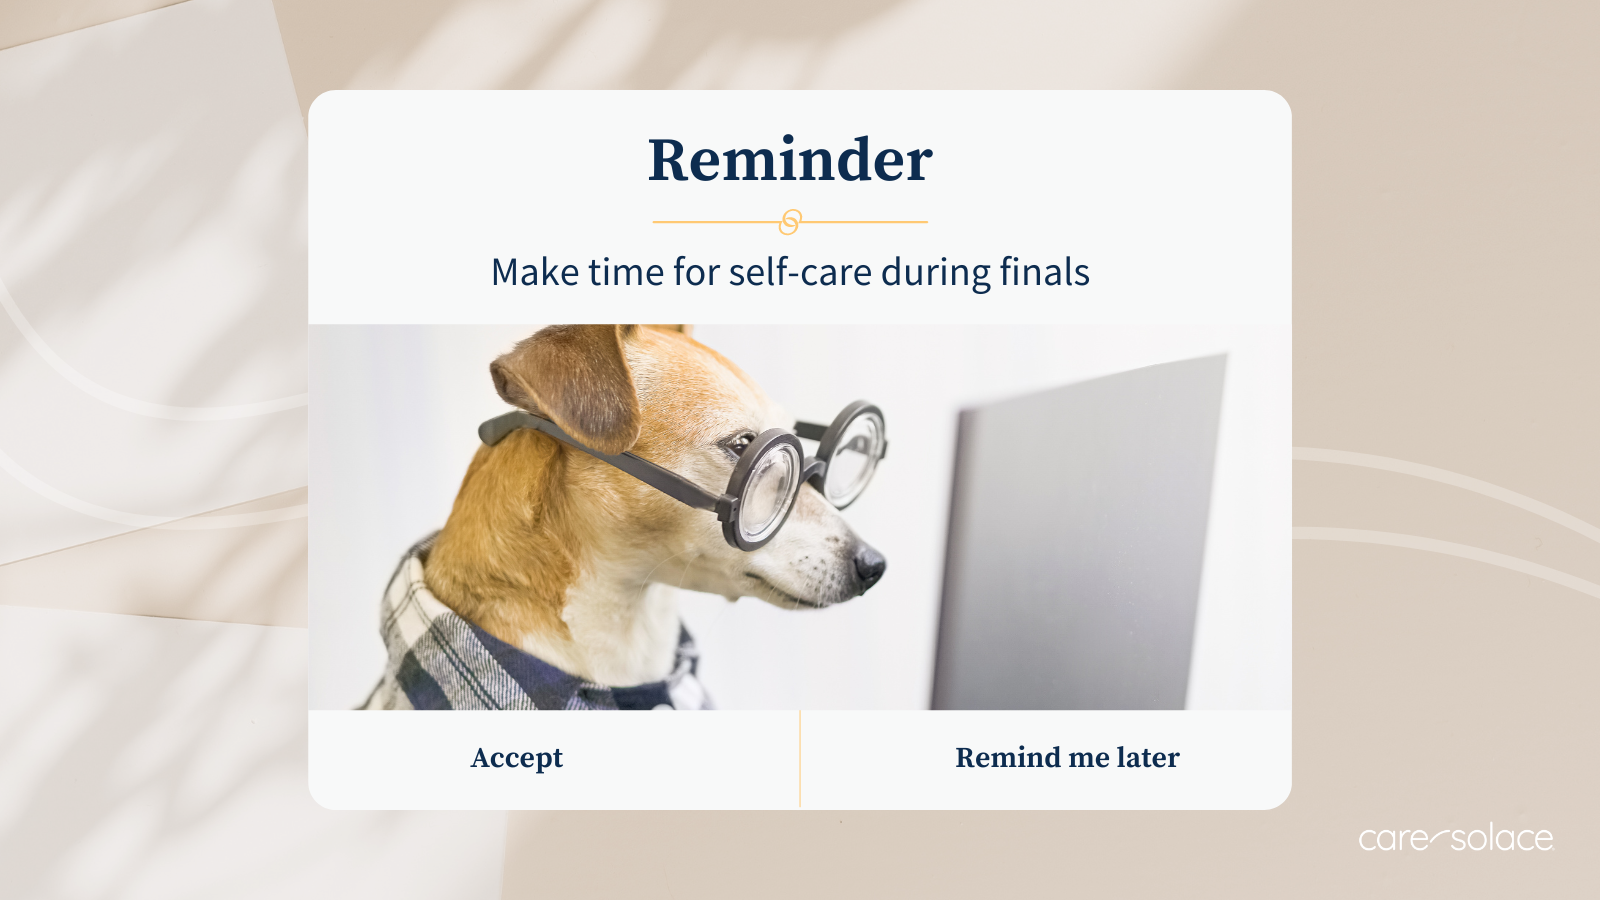 Reminder: Make time for self-care during finals